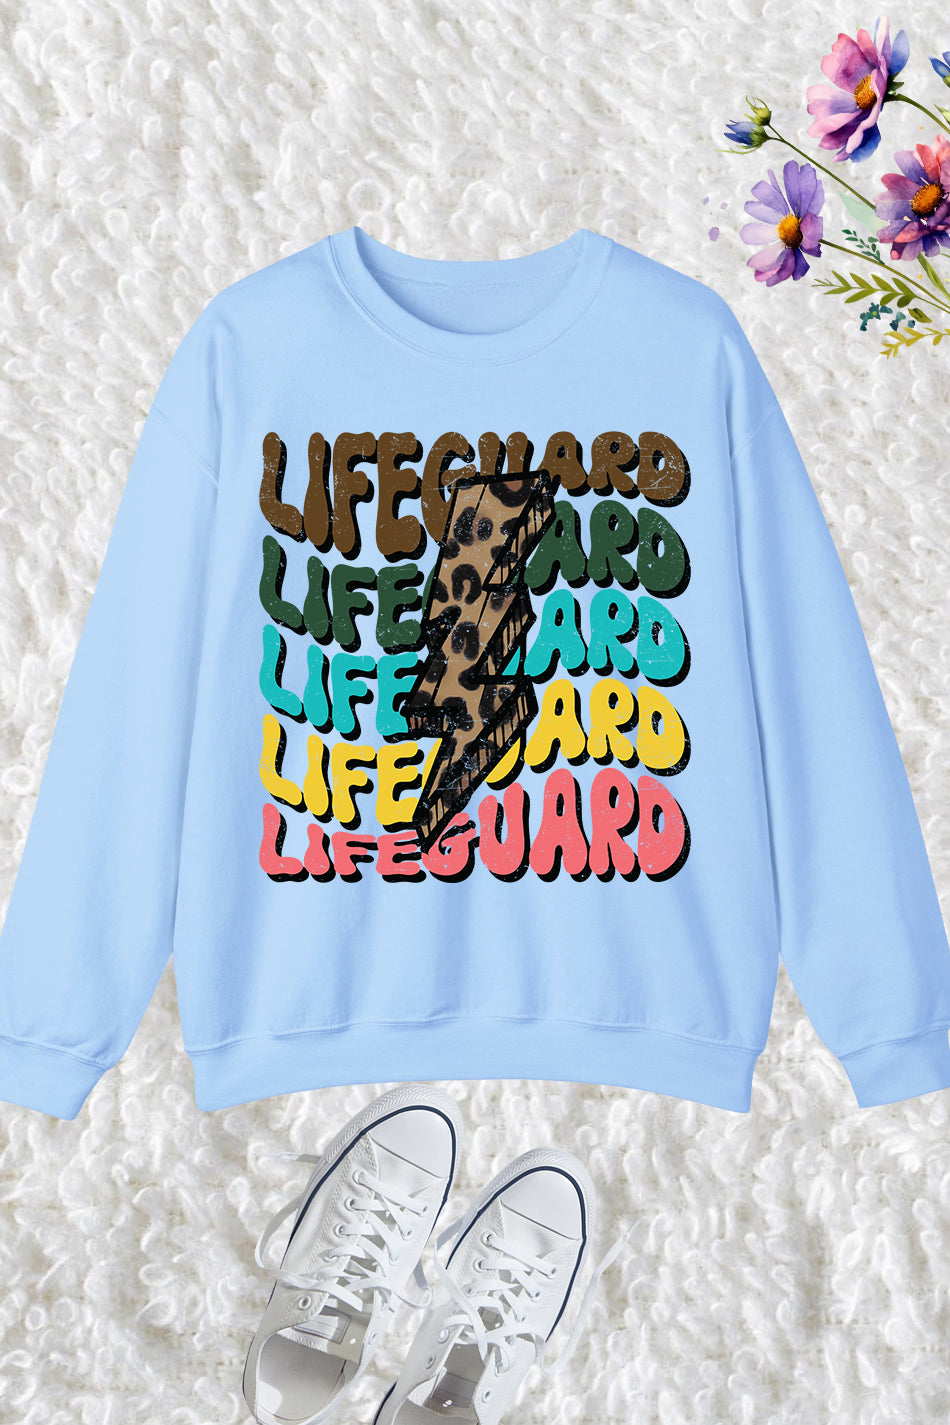 Lifeguard Power Sweatshirt